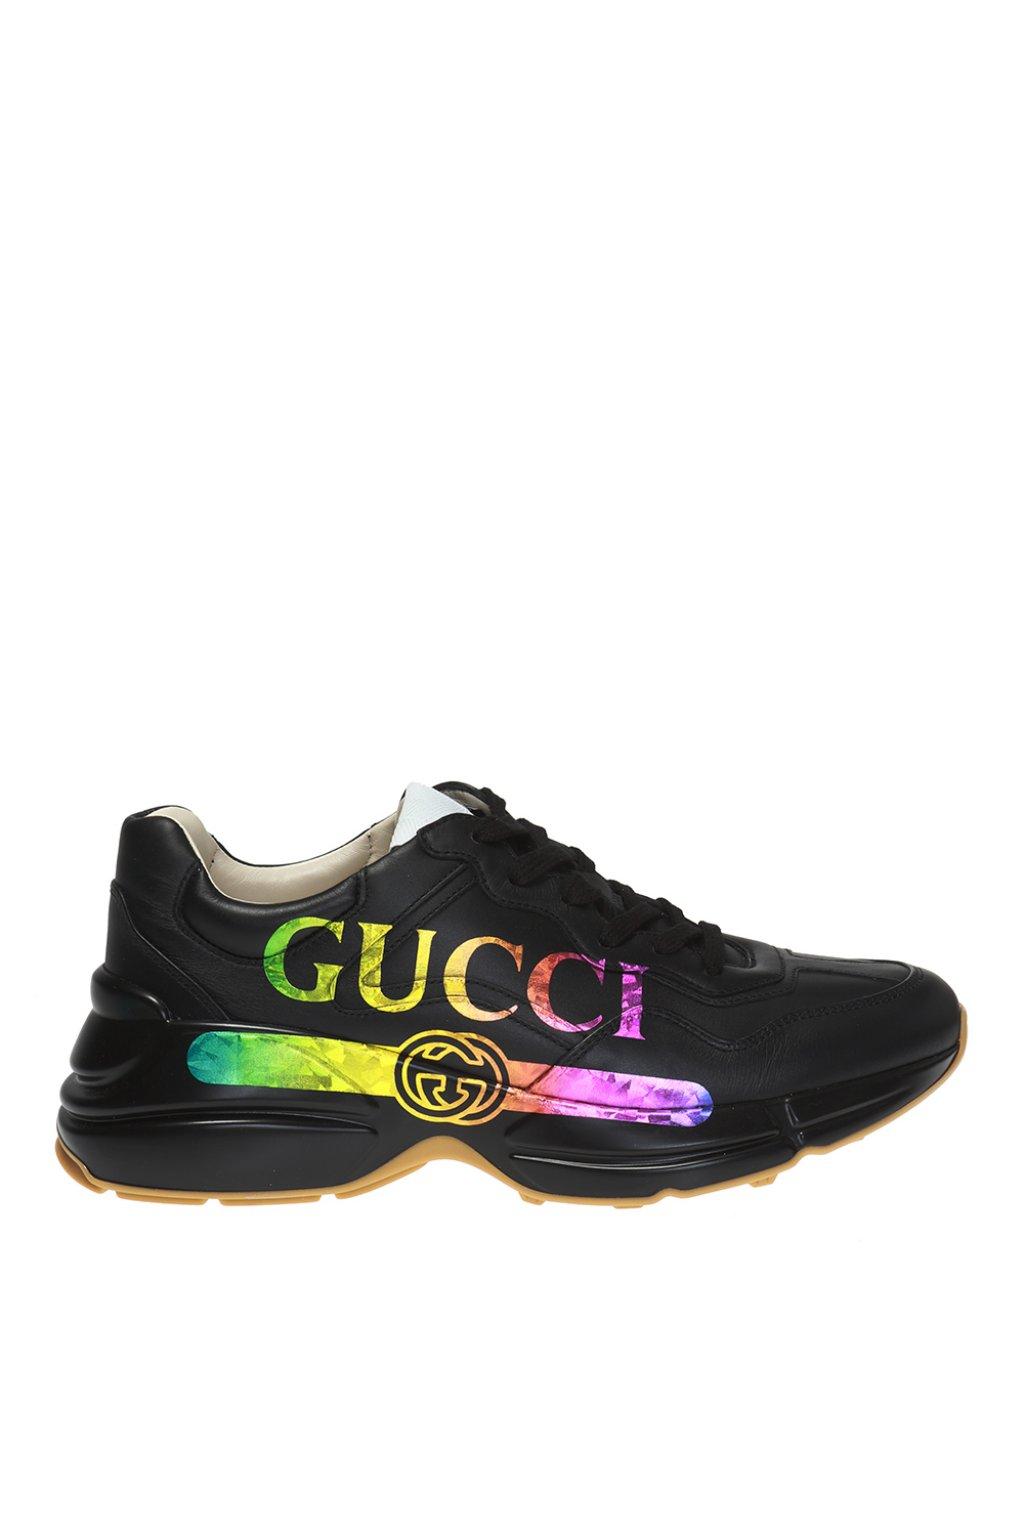 gucci sneakers logo